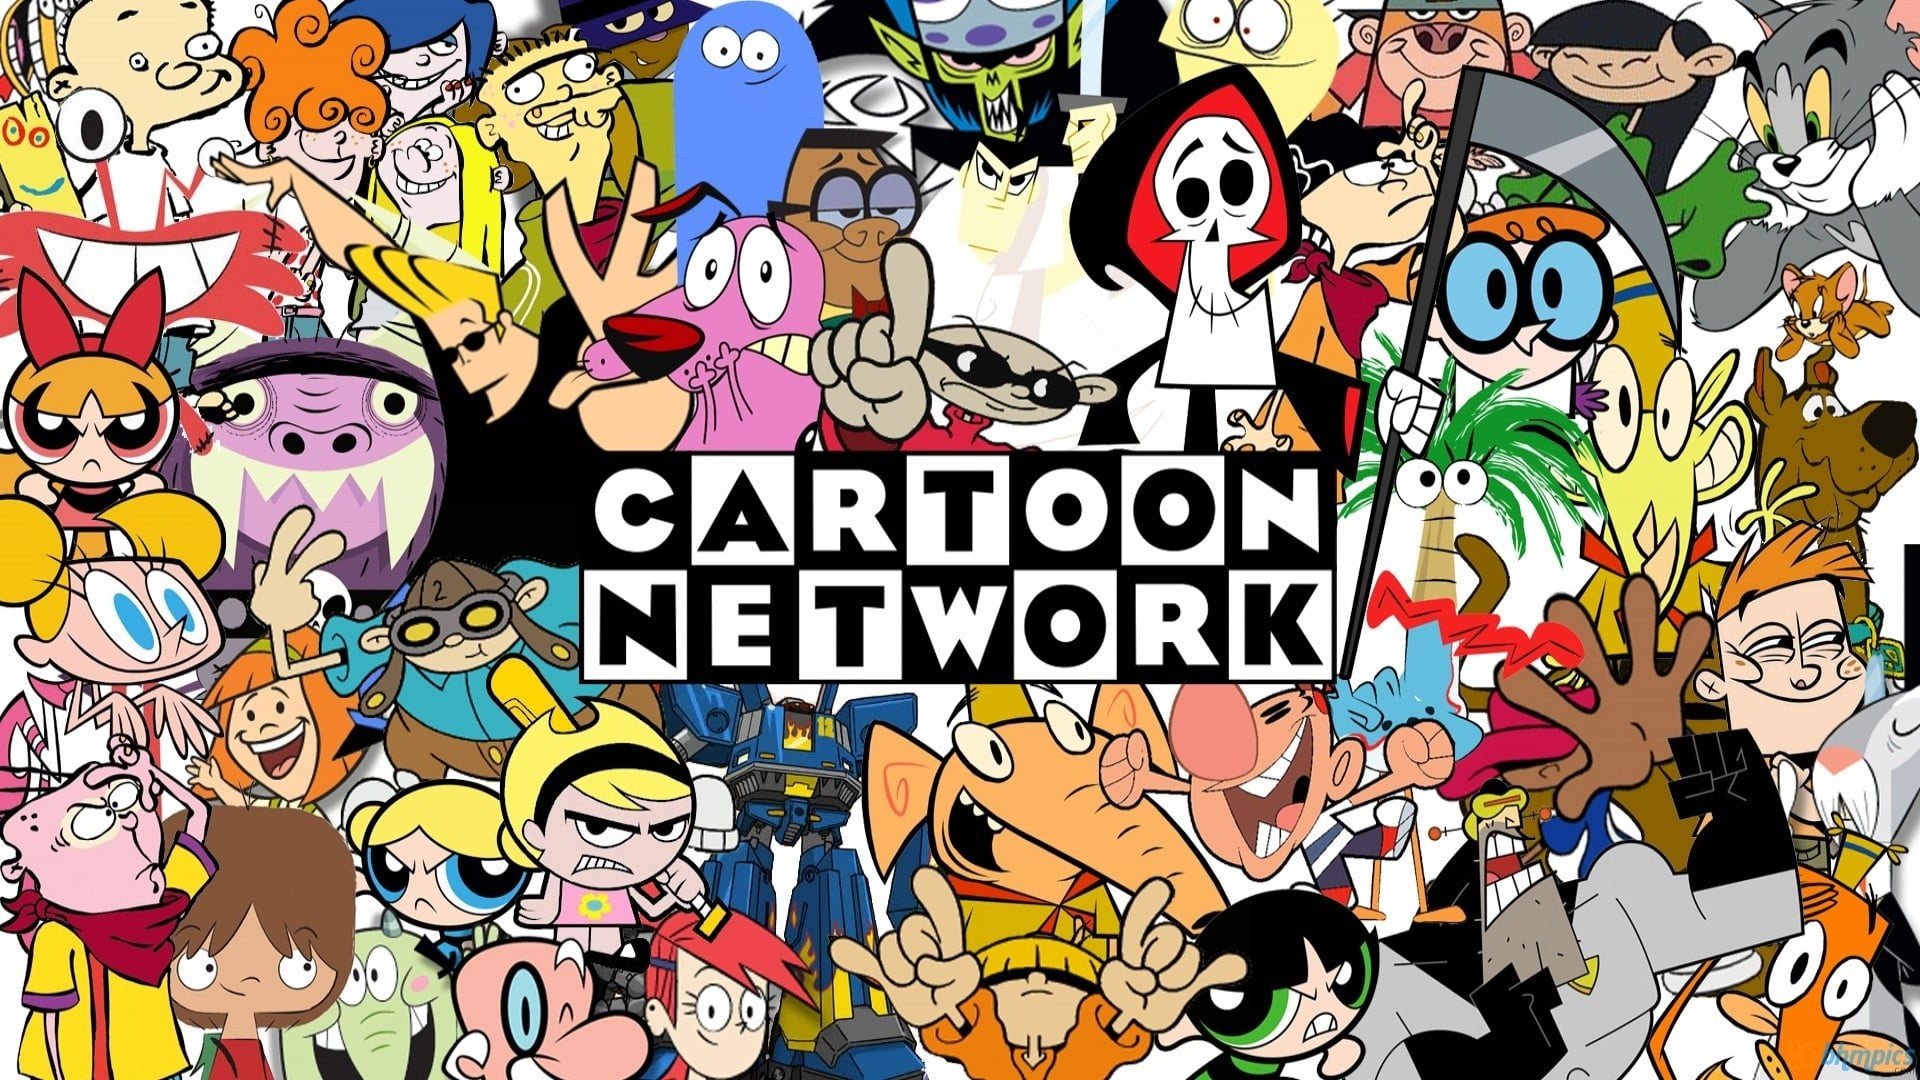 Cartoon Network digital wallpaper, digital art, movies, Courage the Cowardly Dog